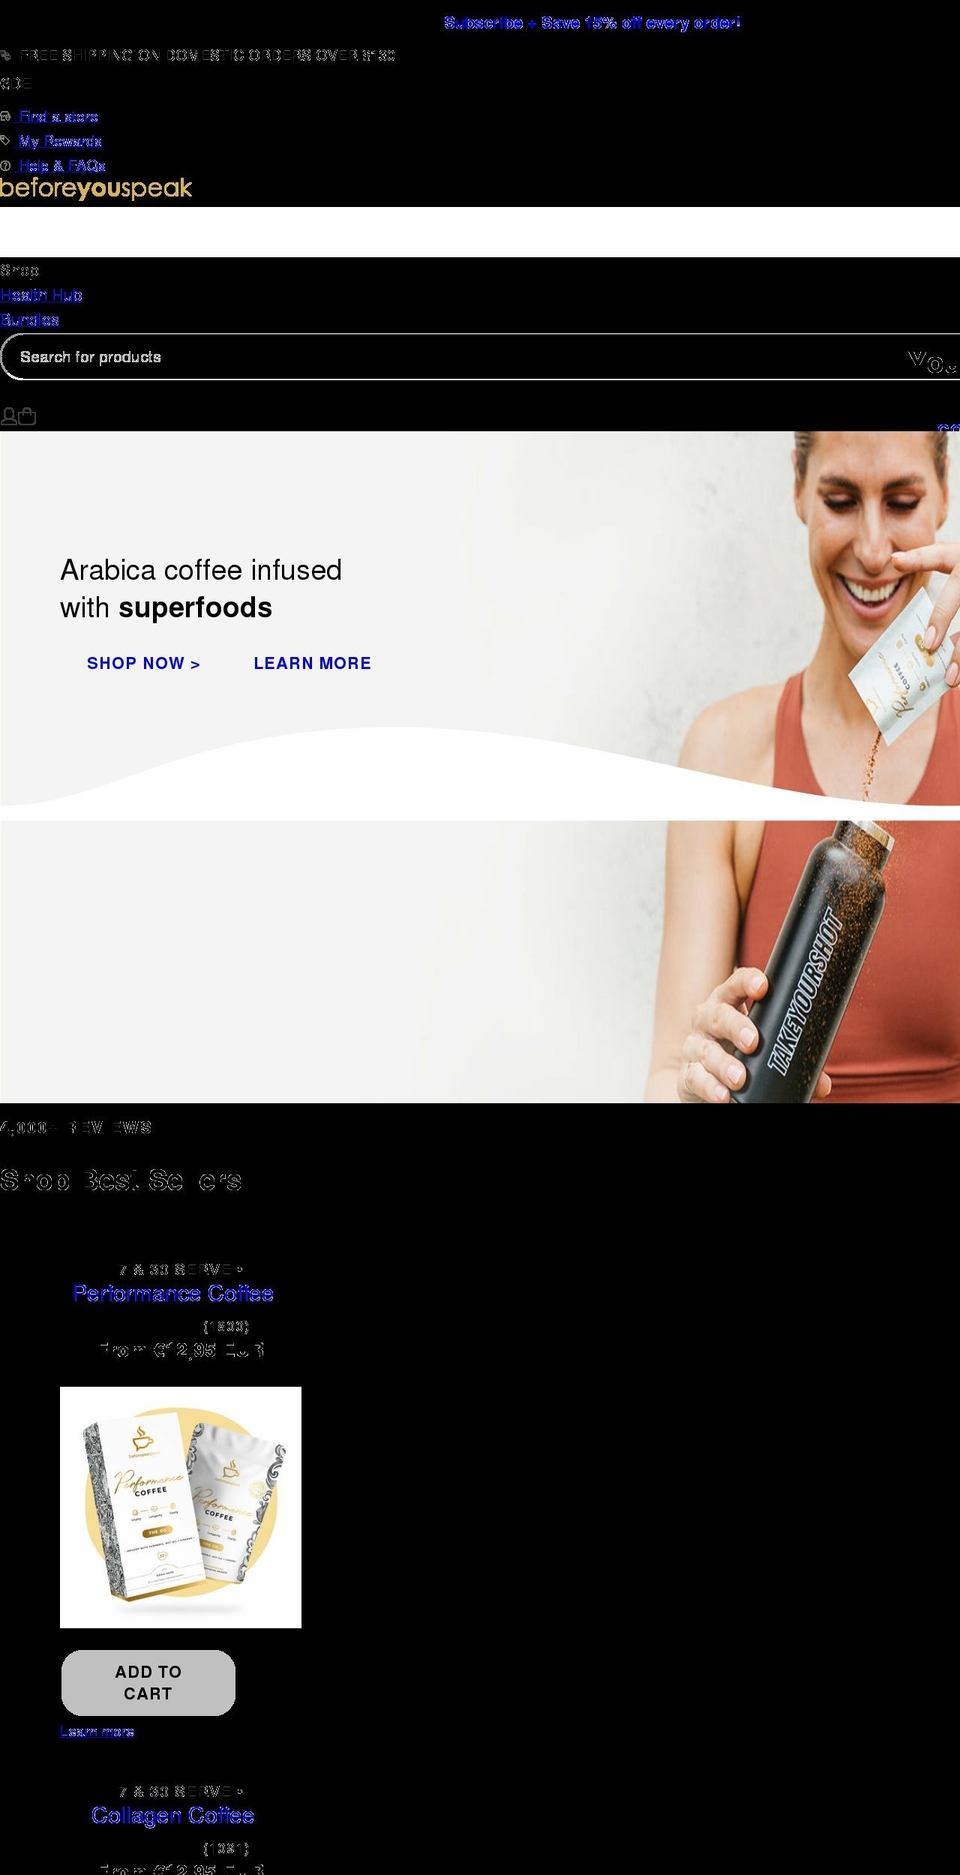 beforeyouspeakcoffee.com shopify website screenshot